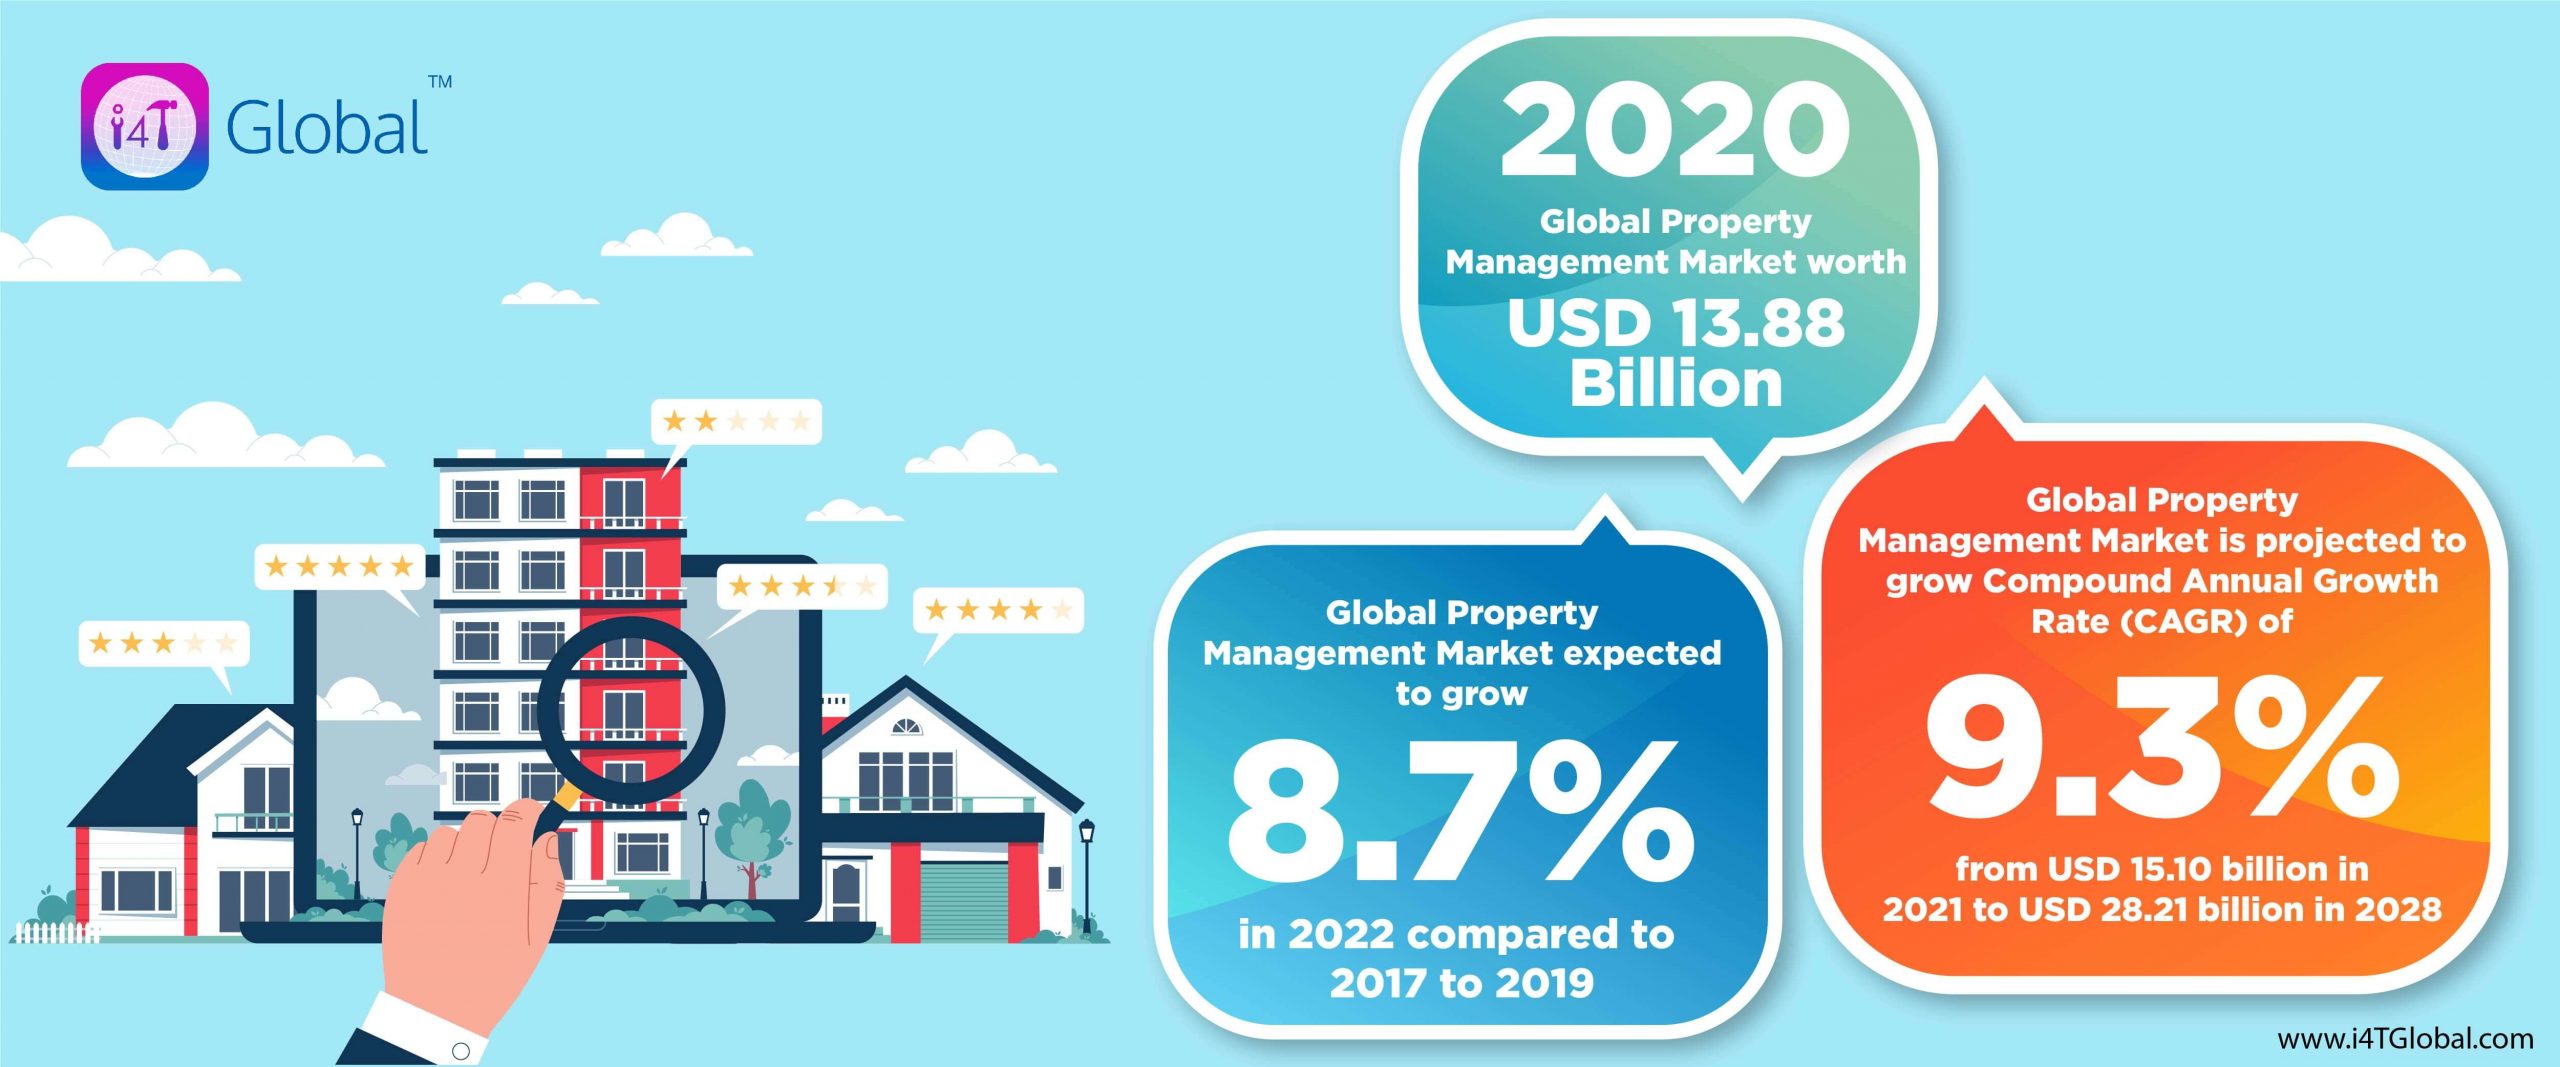 Global property management market growth - i4T Global